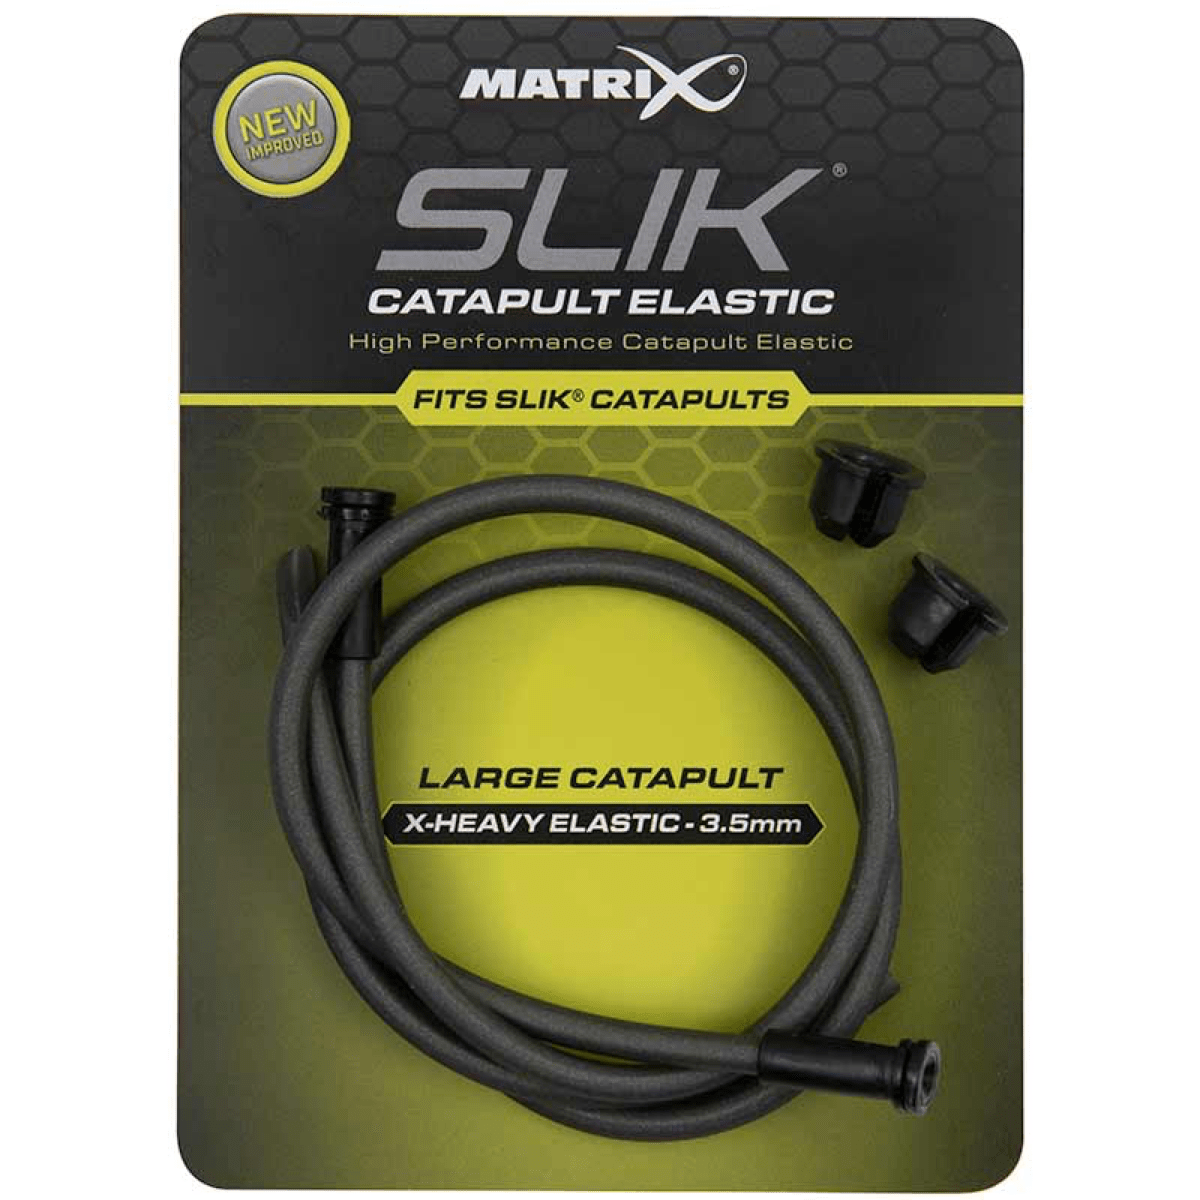 Matrix slik catapult spare elastic x-heavy 3.5mm